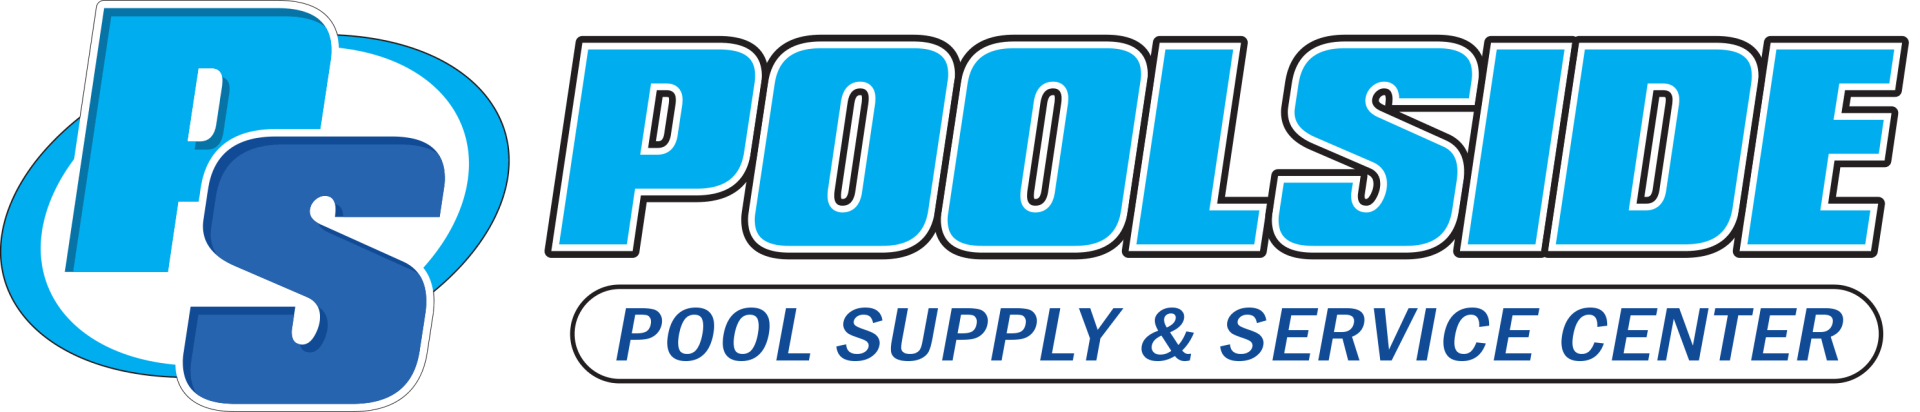 Poolside Pool Supply - Logo